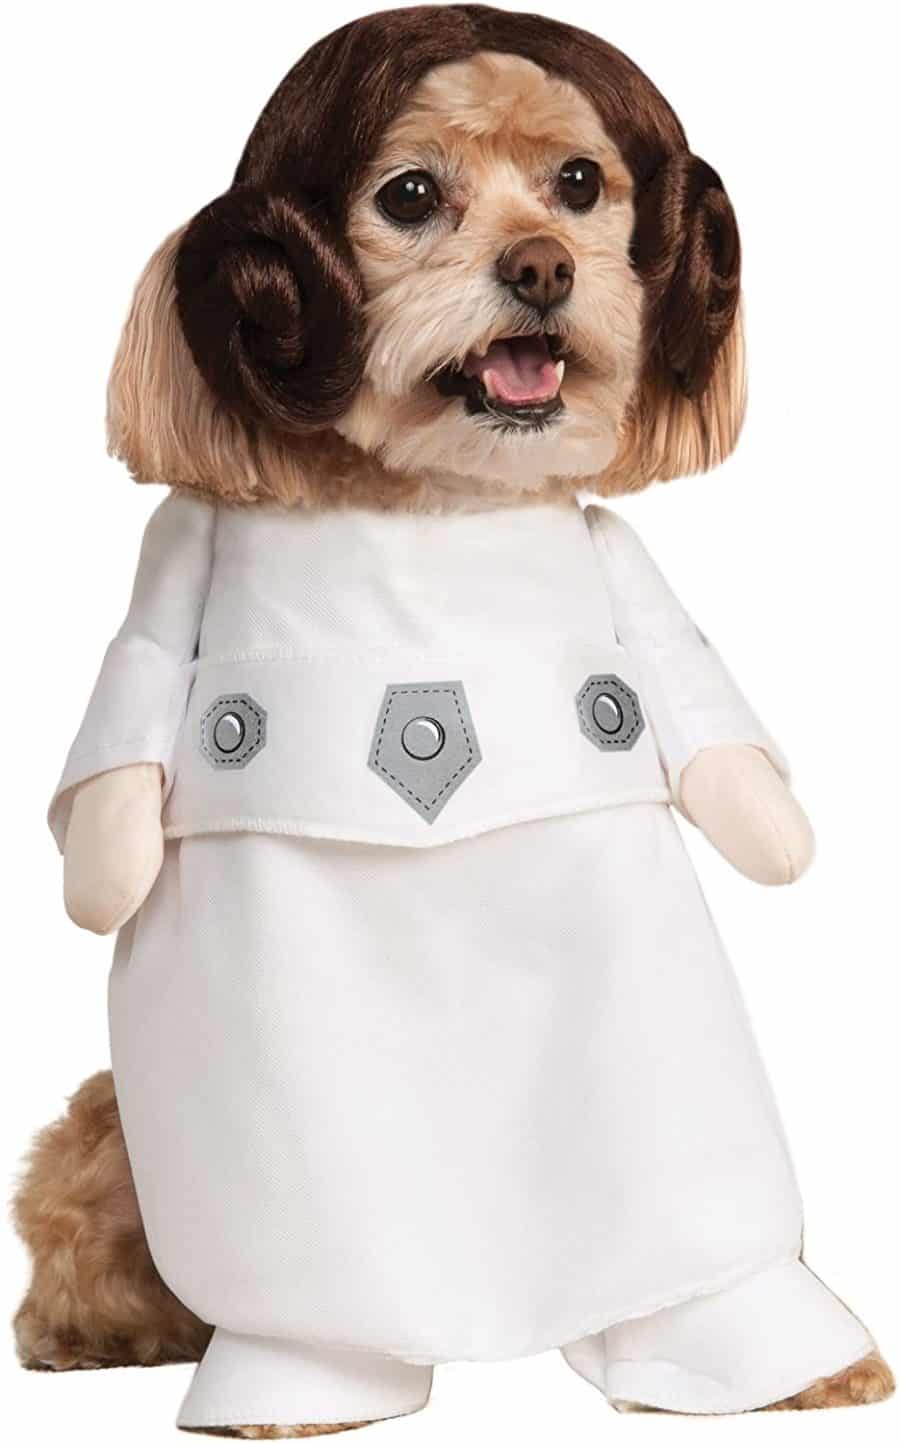 Princess Leia dog costume Halloween